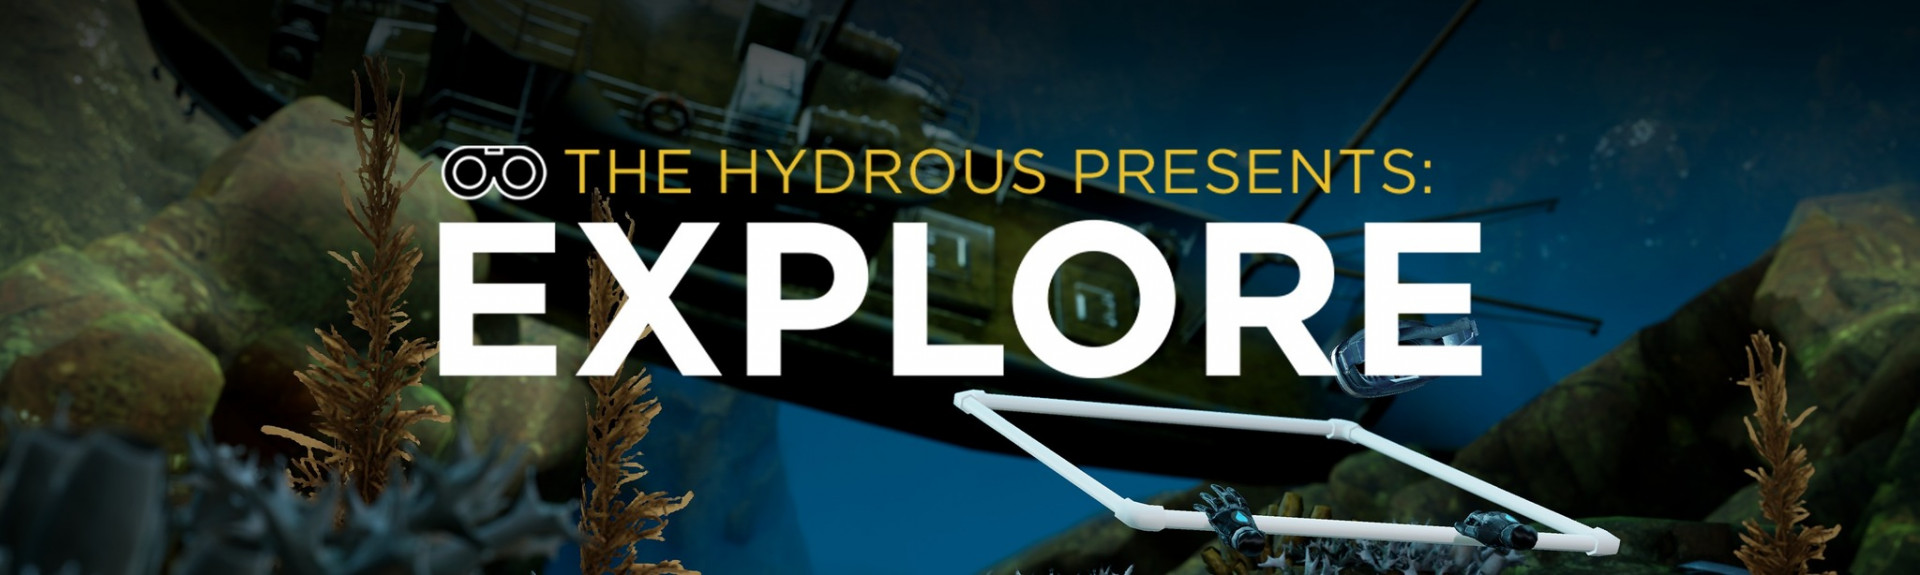 The Hydrous presents: EXPLORE